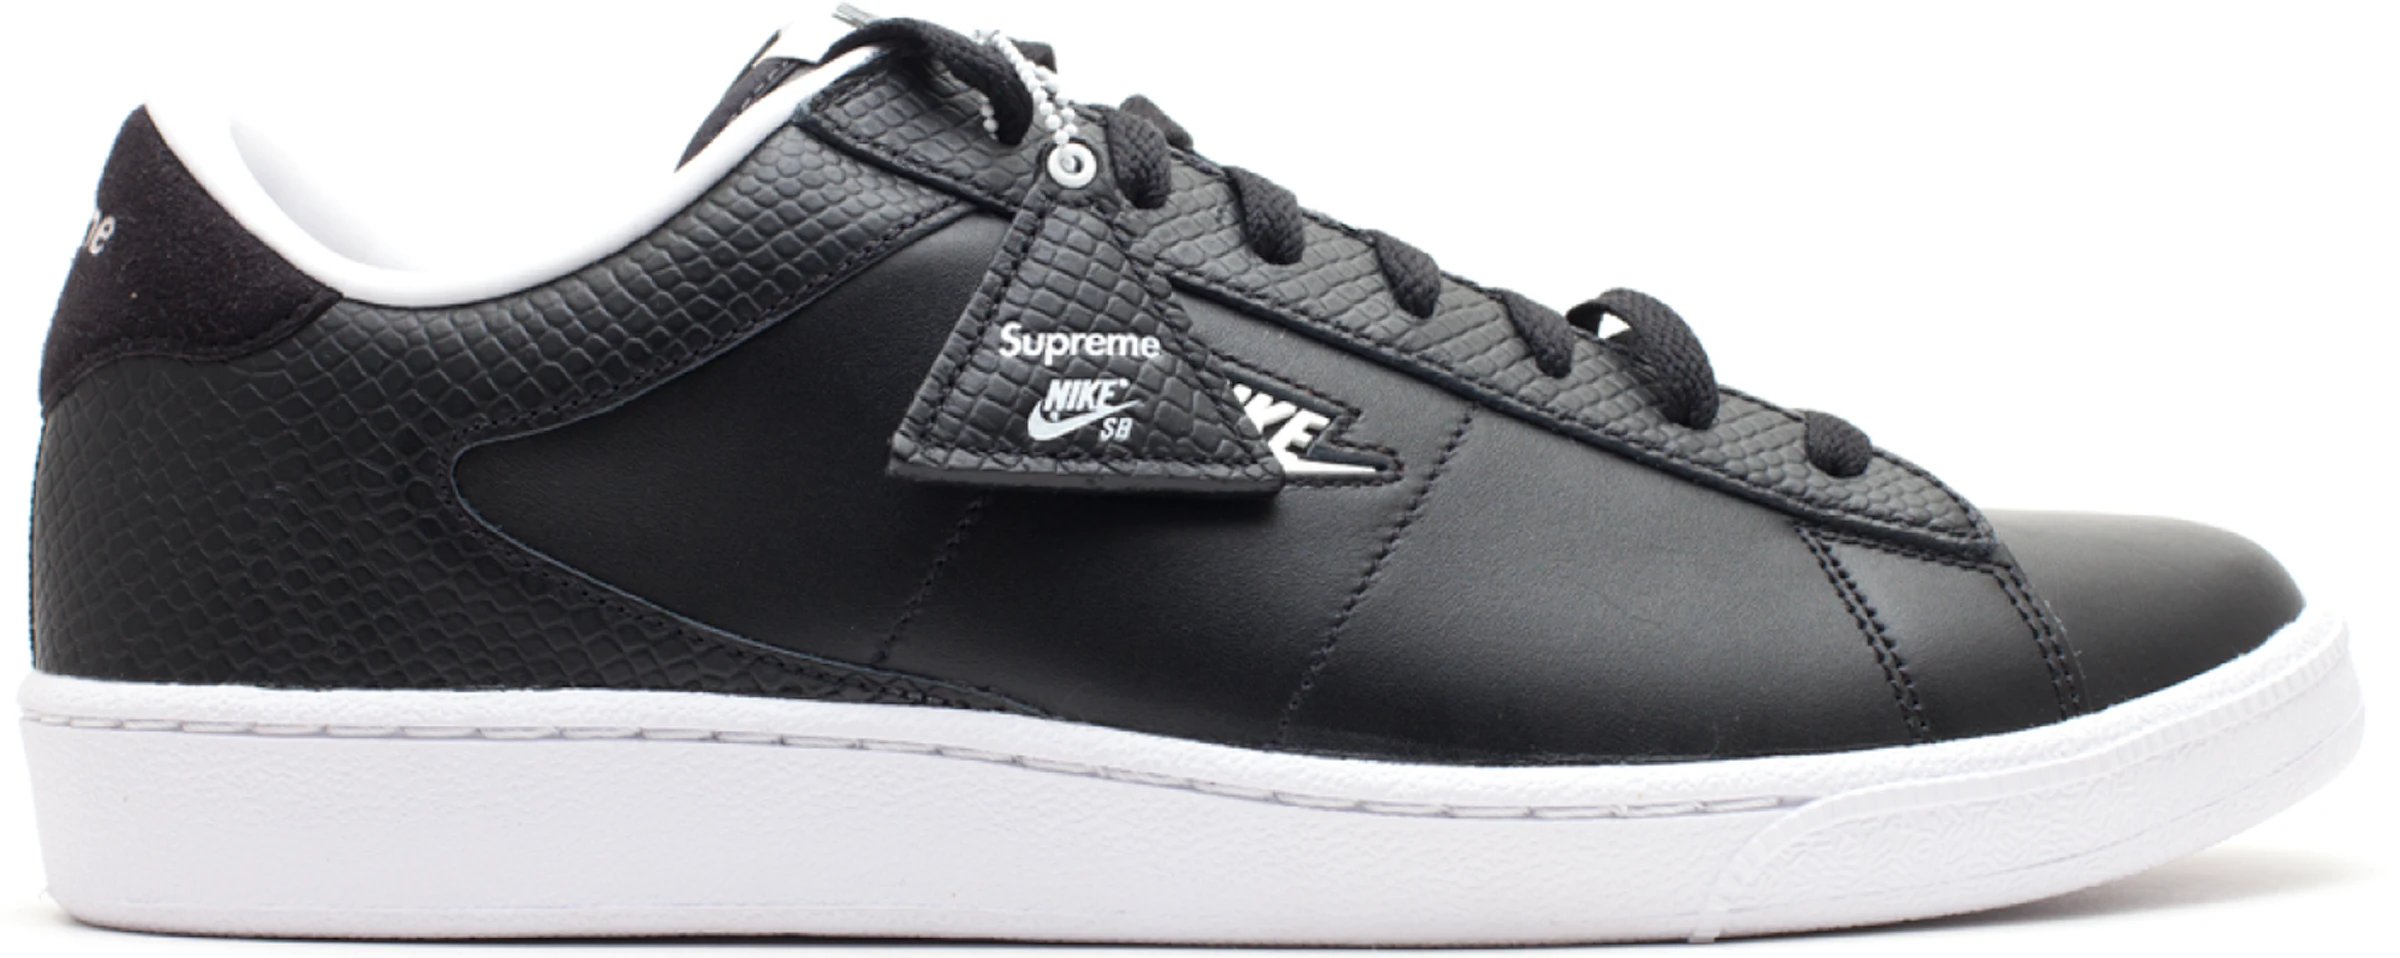 Nike SB Classic Supreme Black - 556045-001 - ES